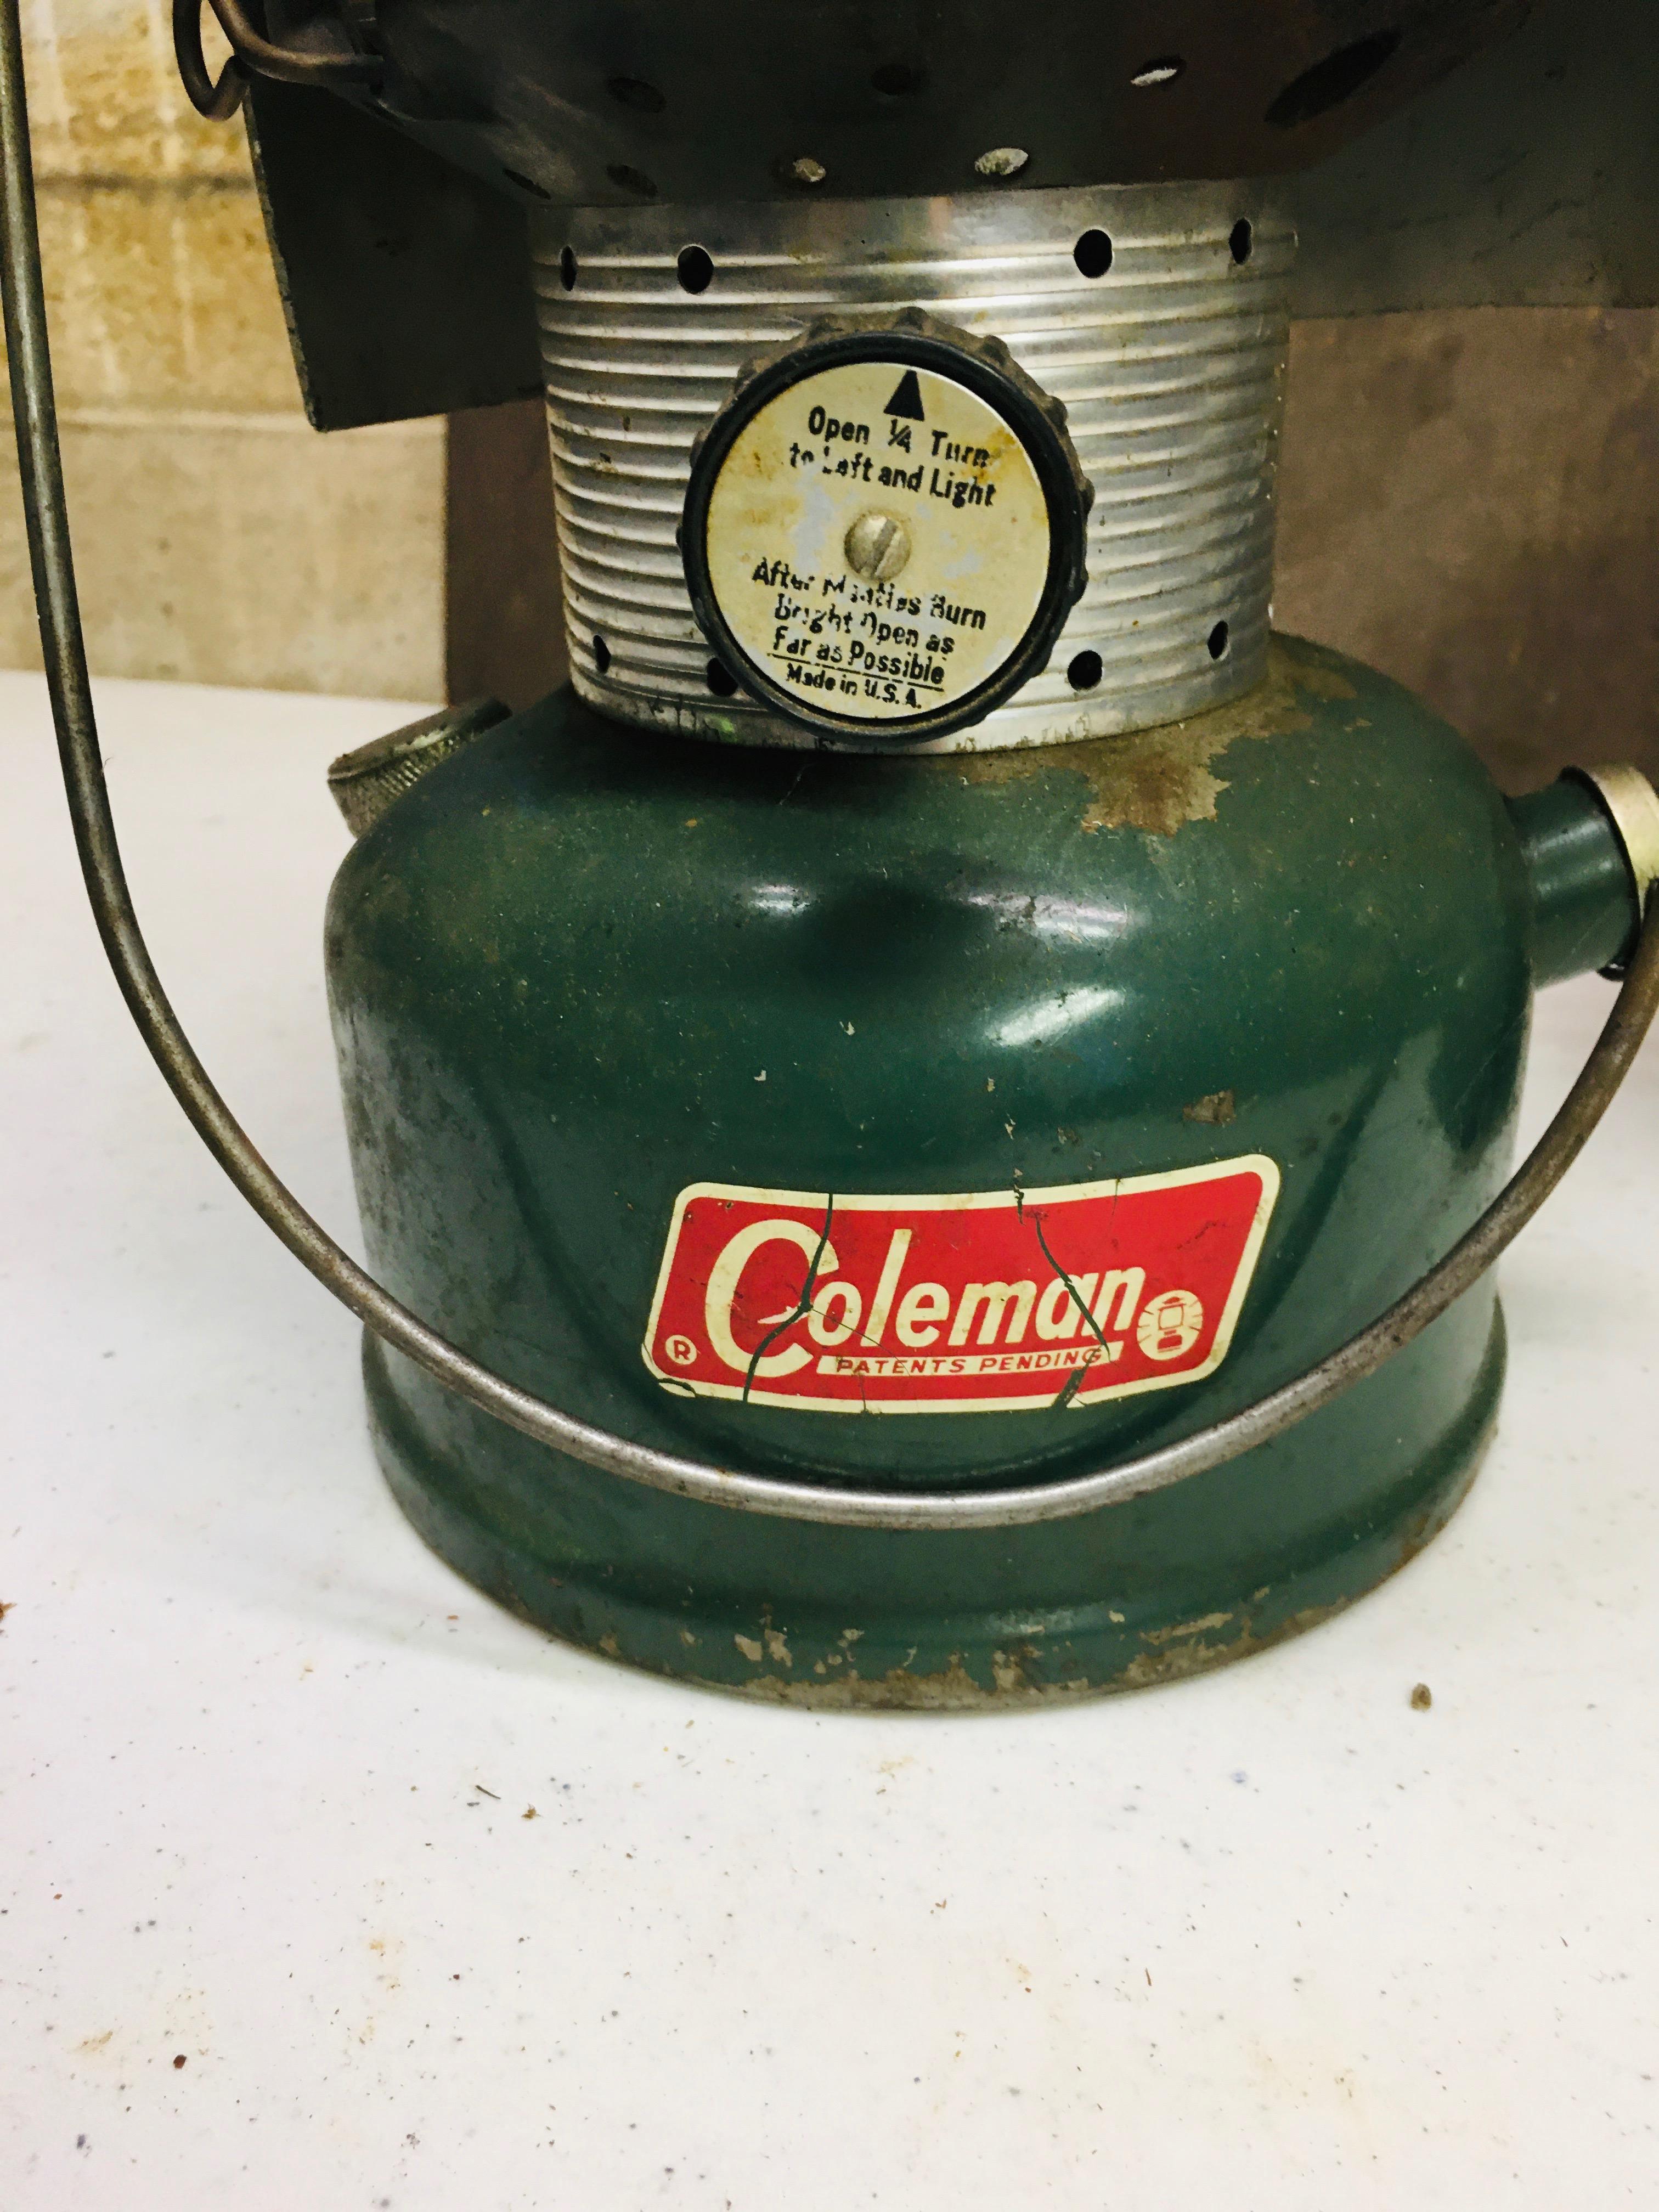 Coleman Compact Stove and Colman Lantern with metal shield